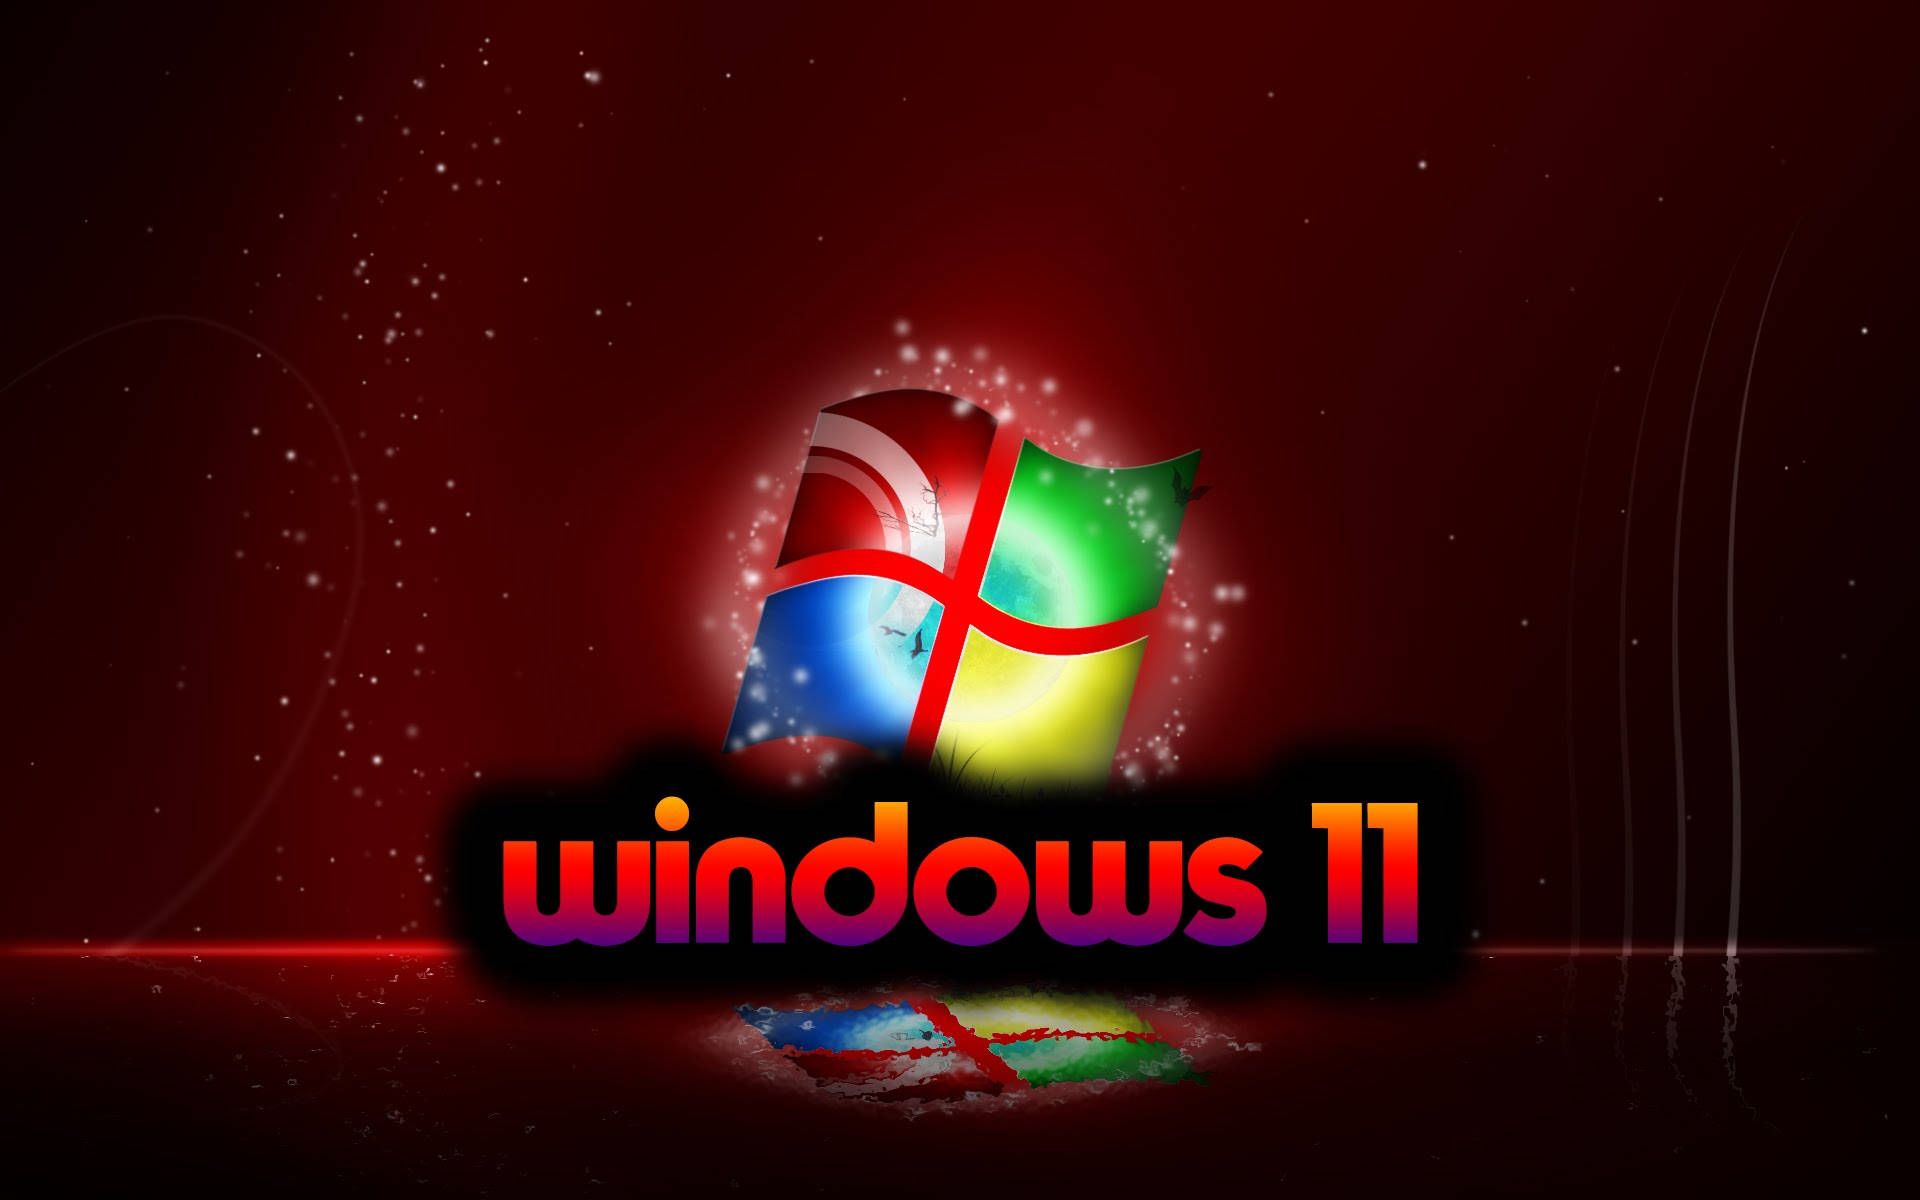 Windows 11 logo on a red background - Windows 11